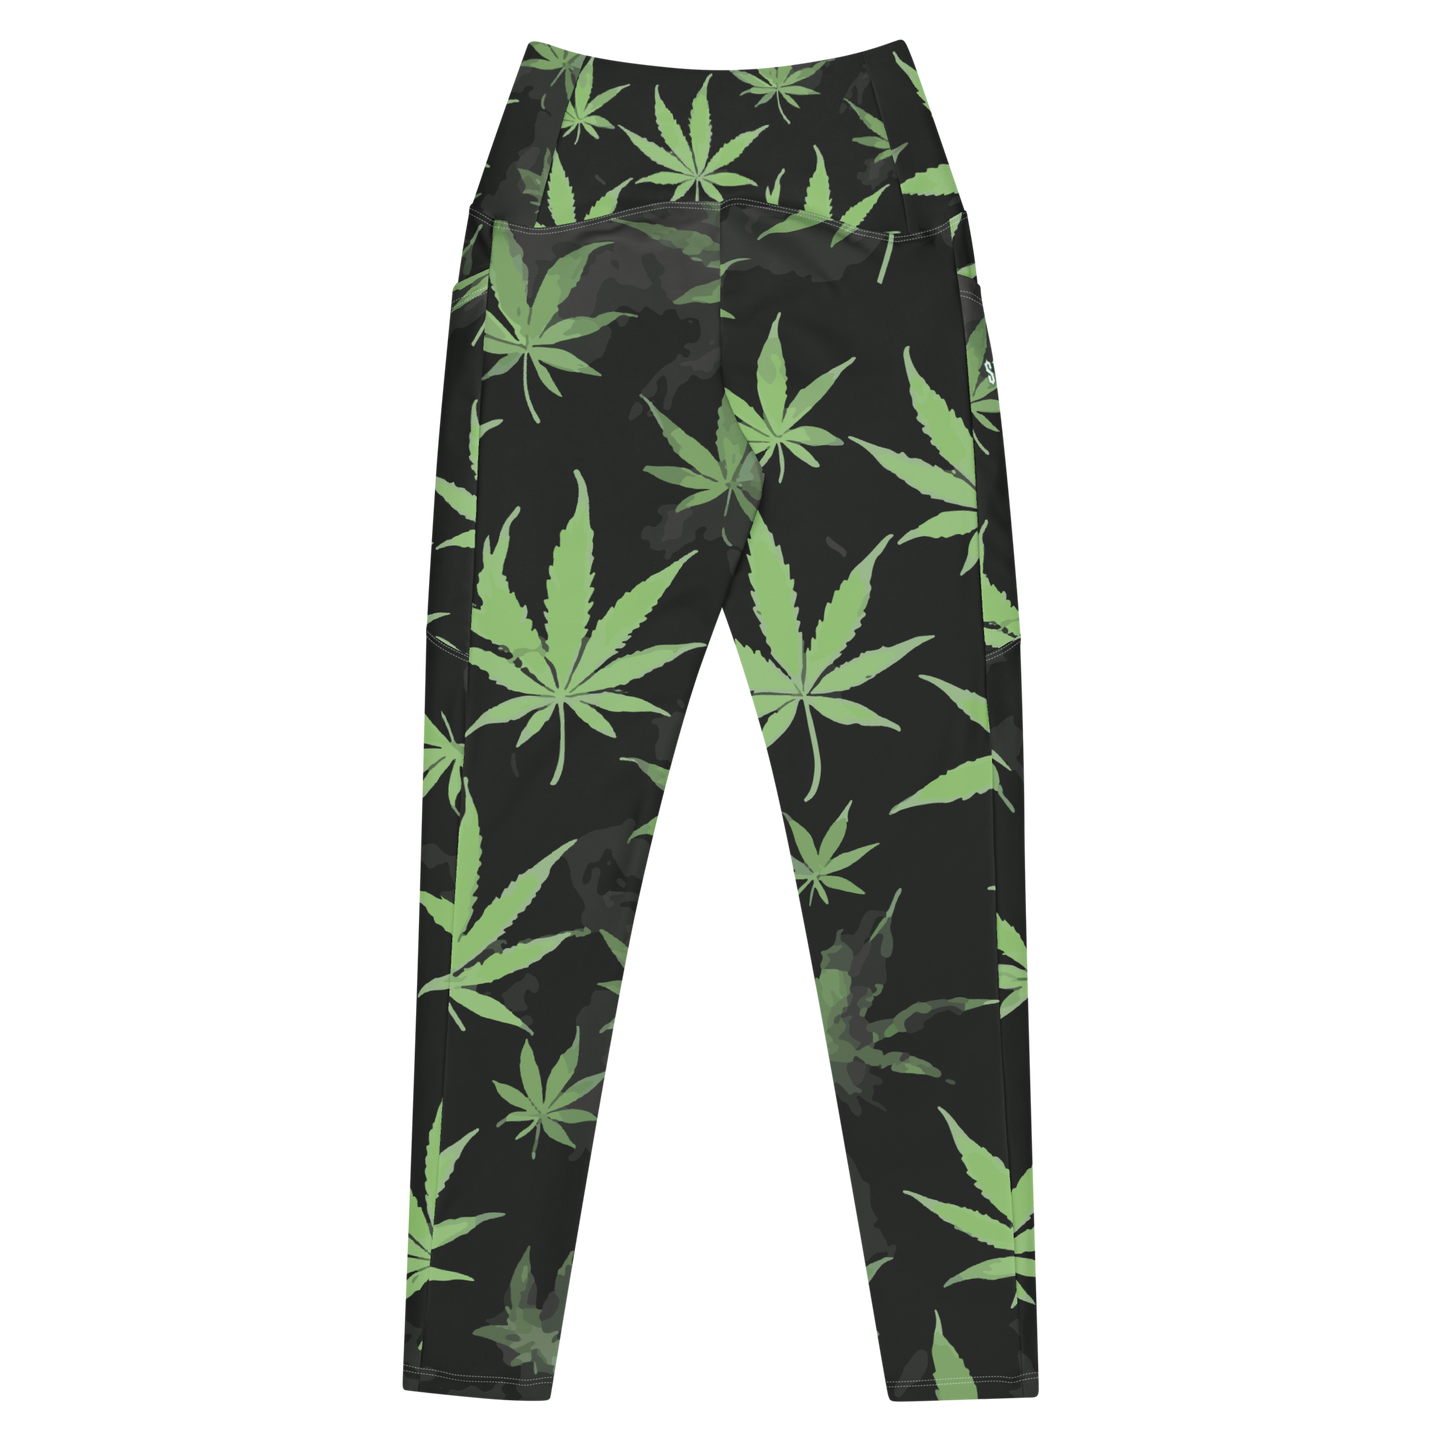 420 Sub Noize Leaf Leggings (Green / Black)